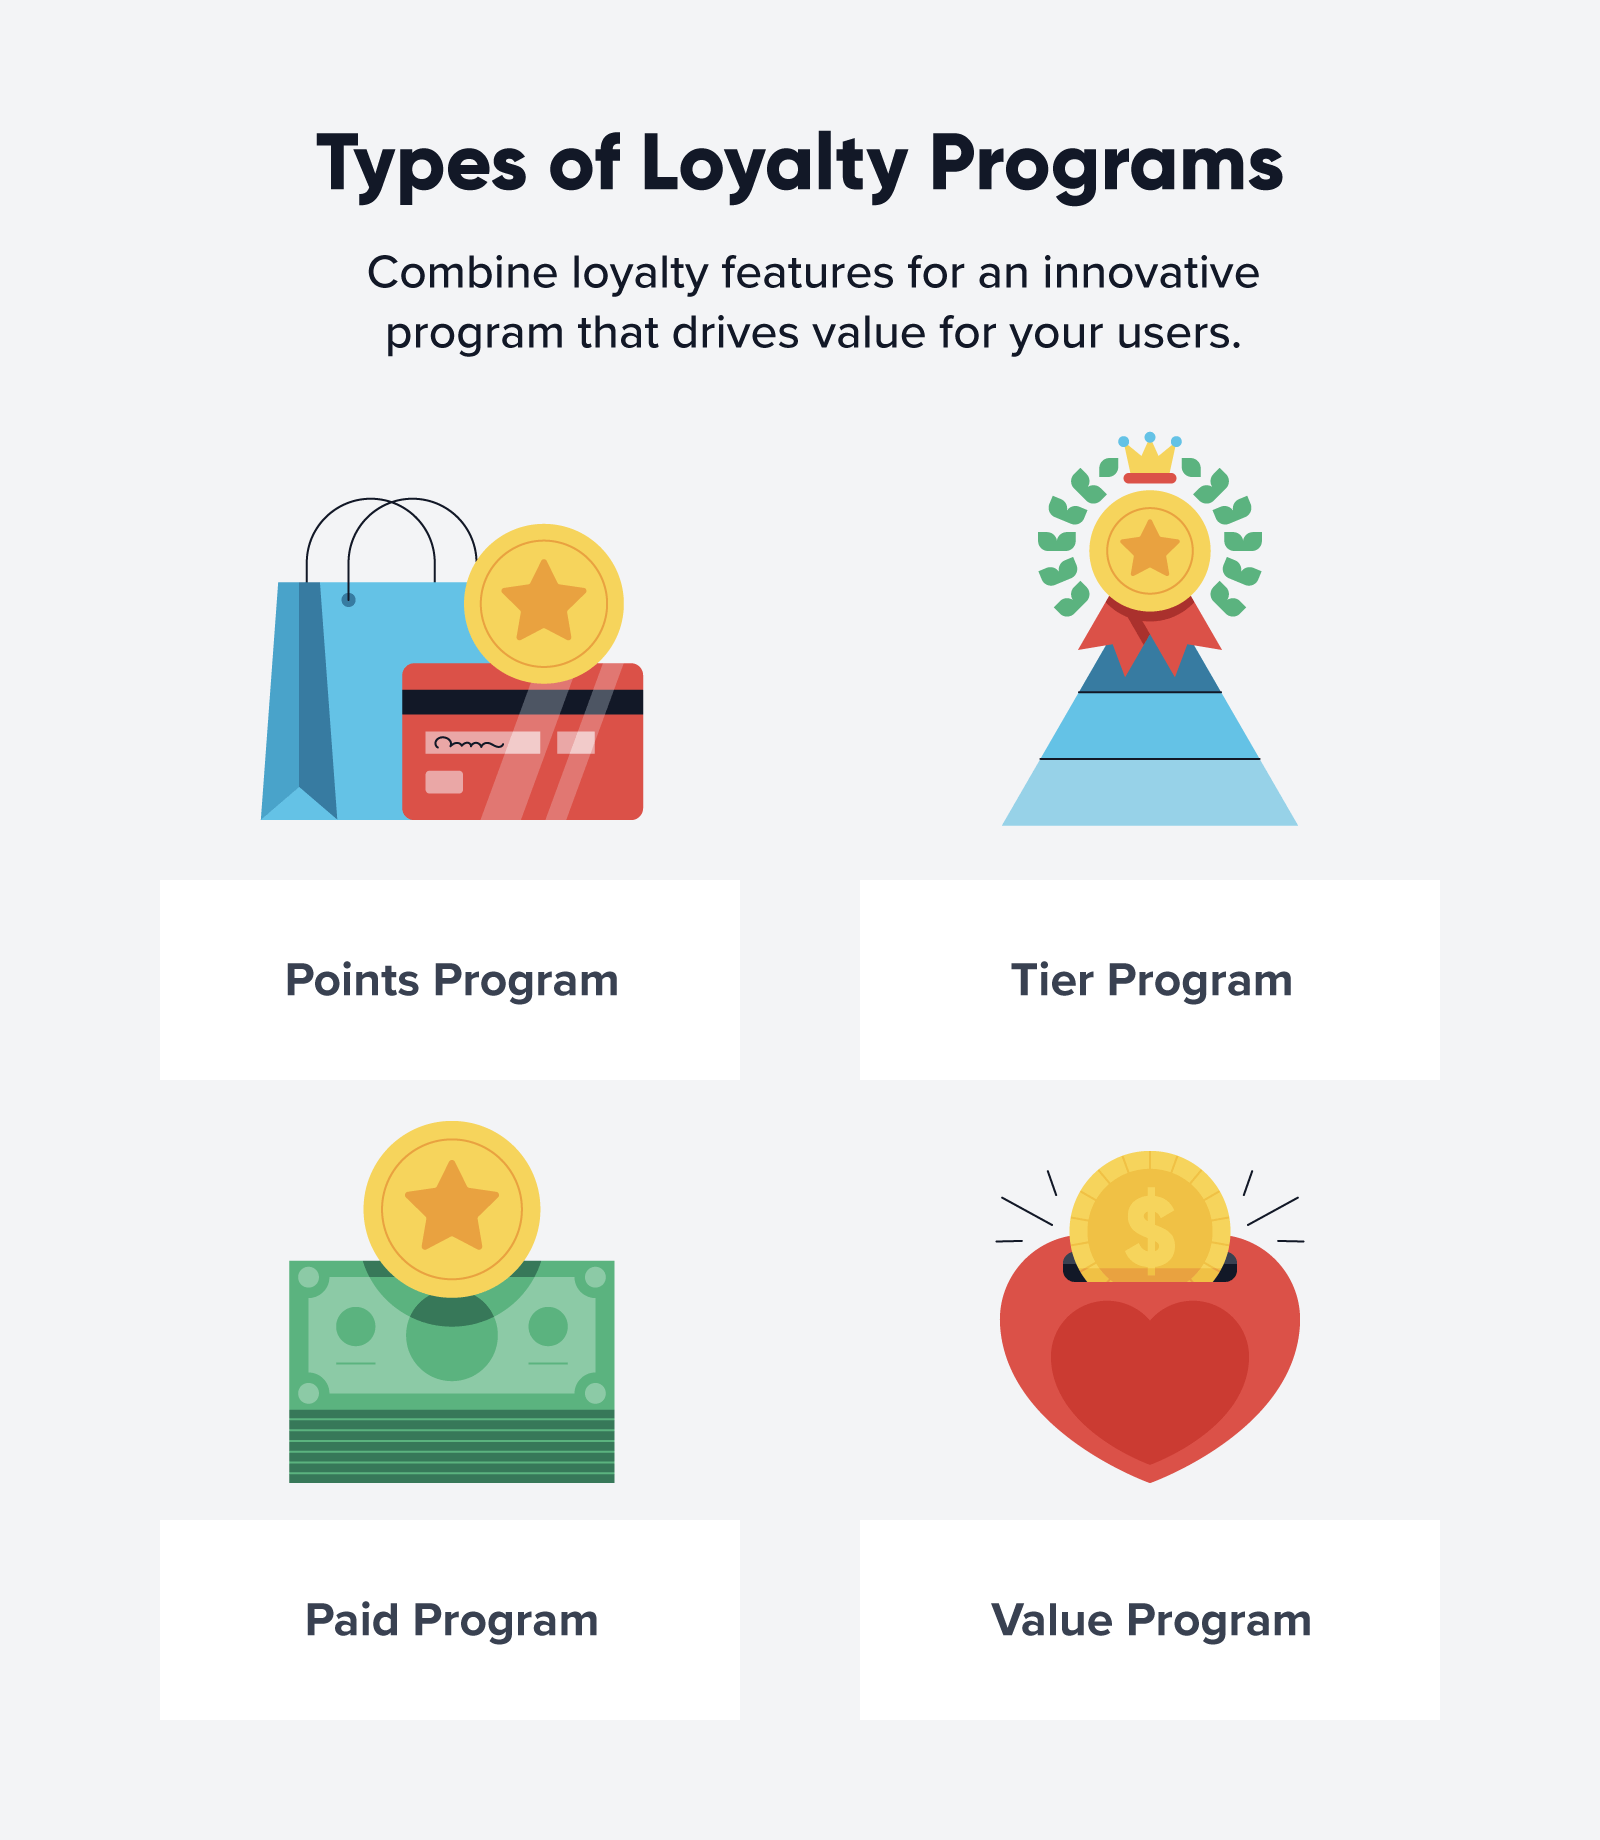 Types of loyalty programs